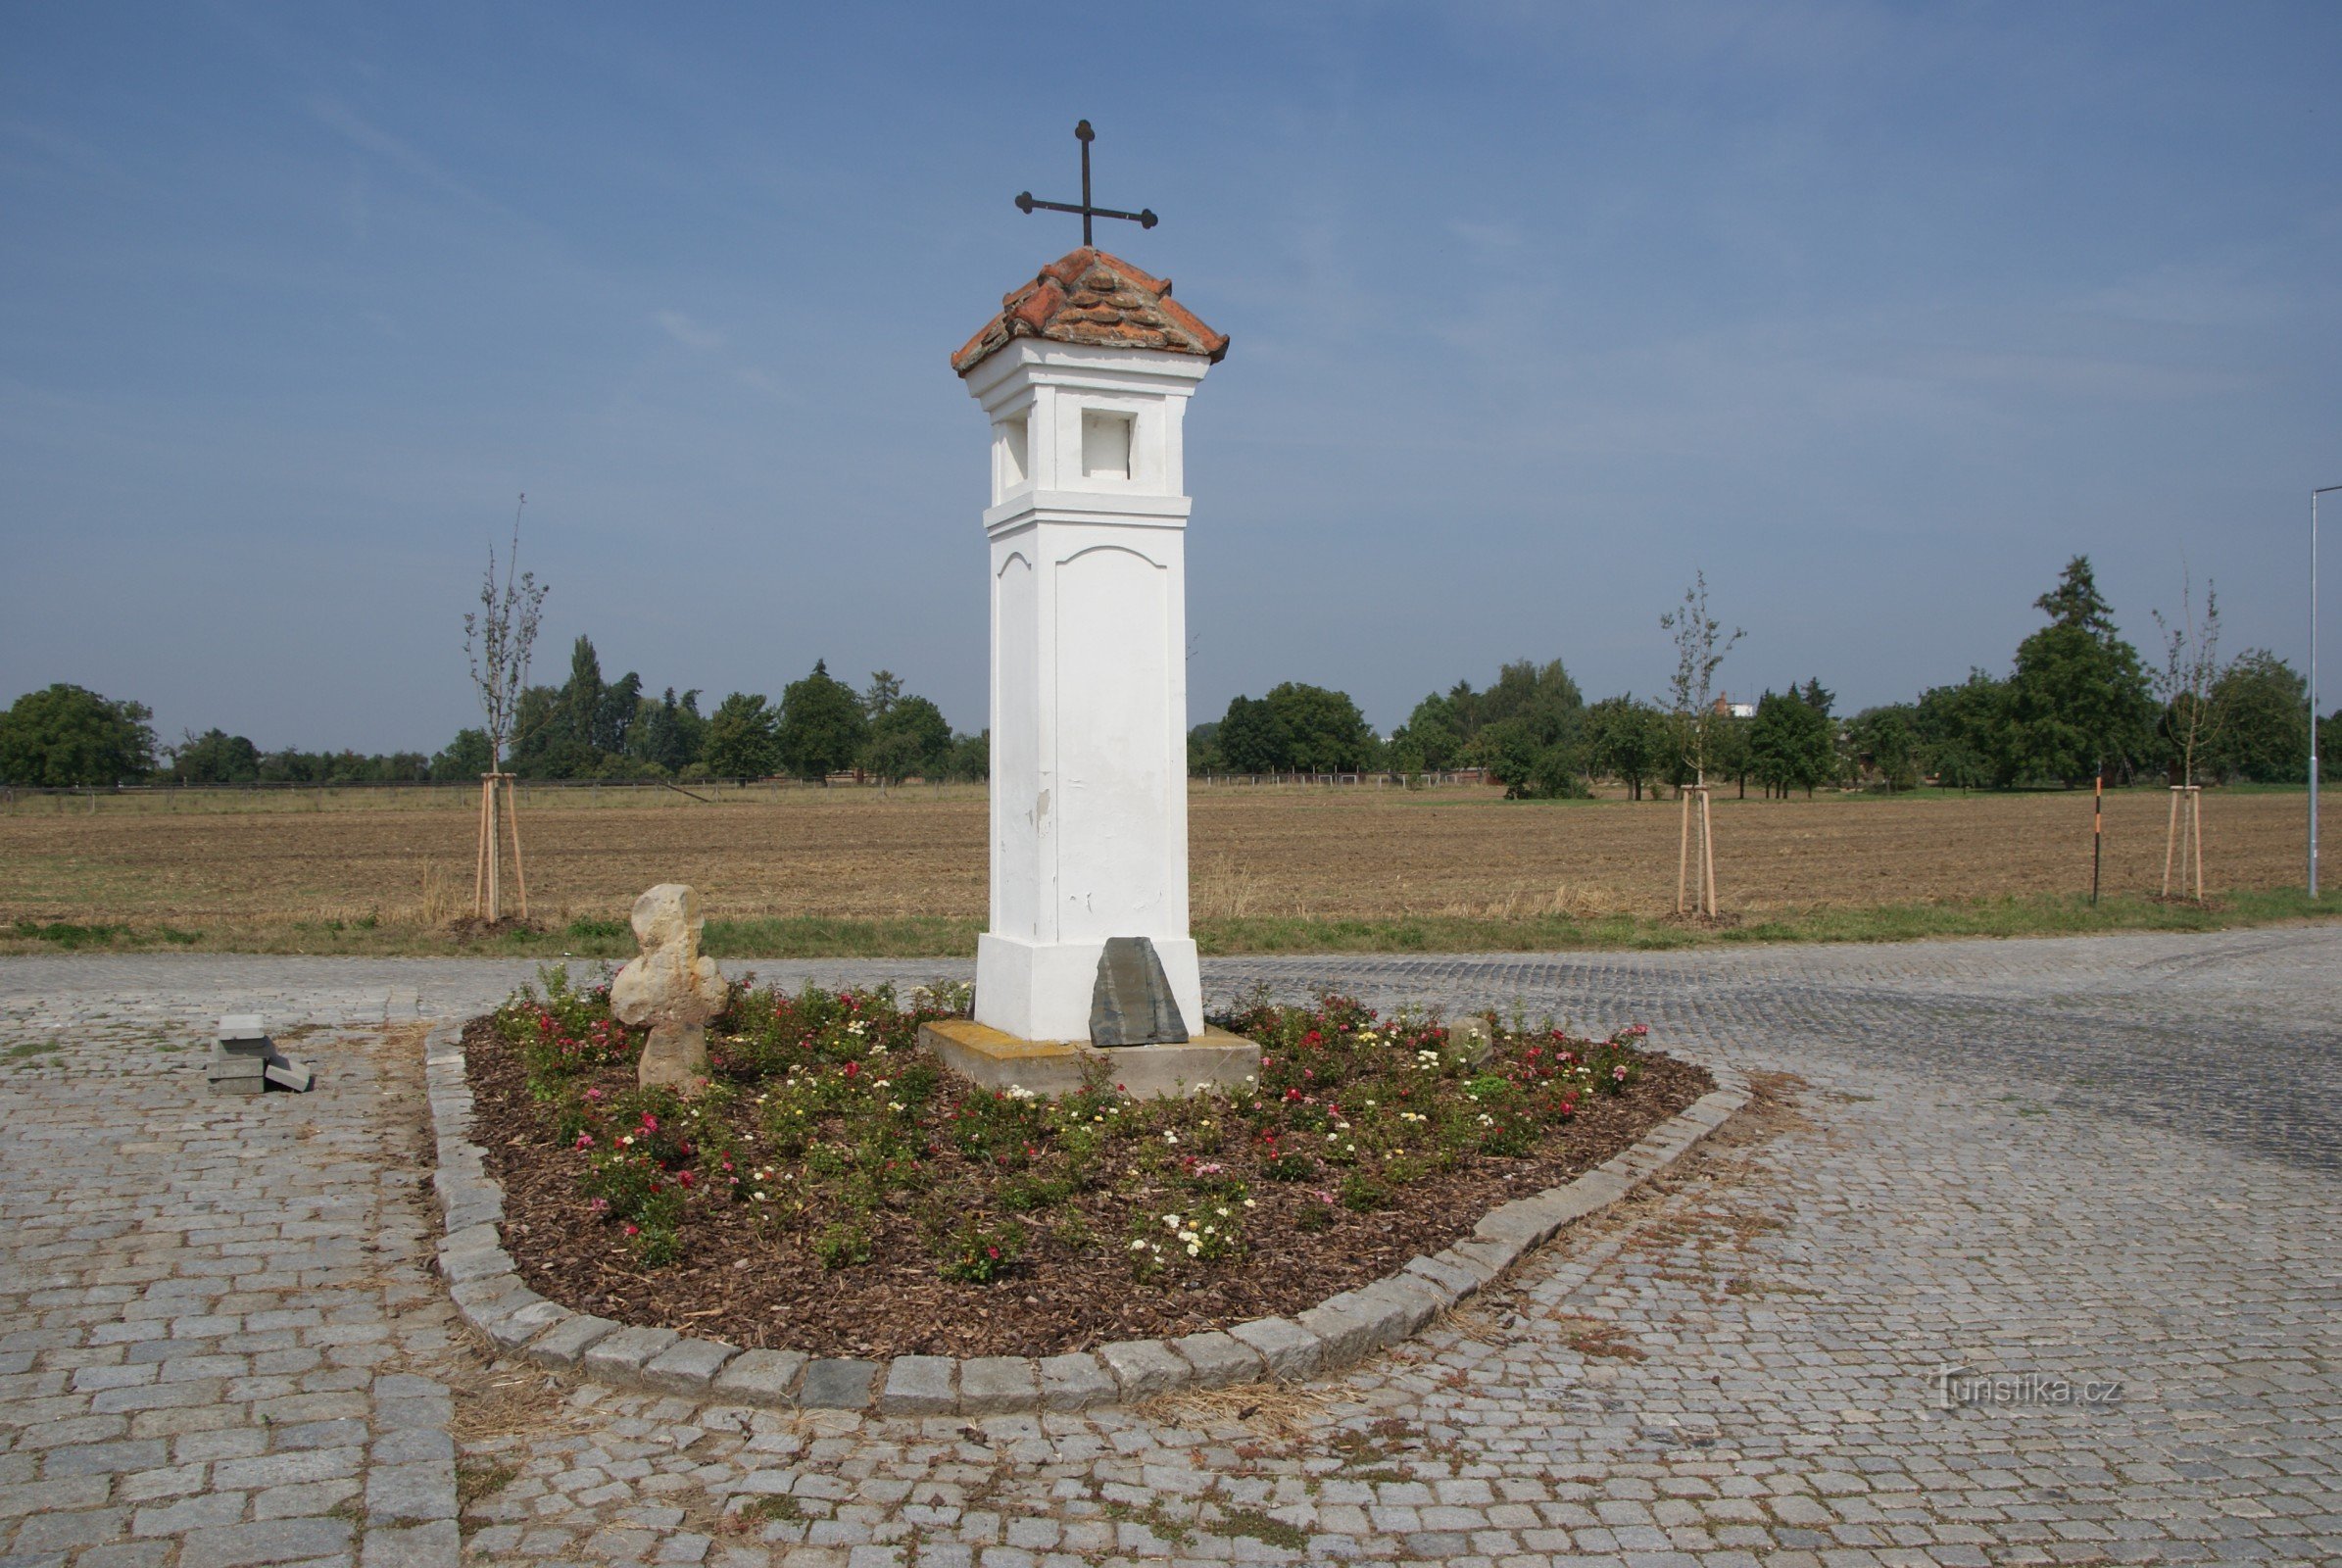 Redovi (kod Olomouca) - "novi" mirovni križ na poljoprivrednoj vagi